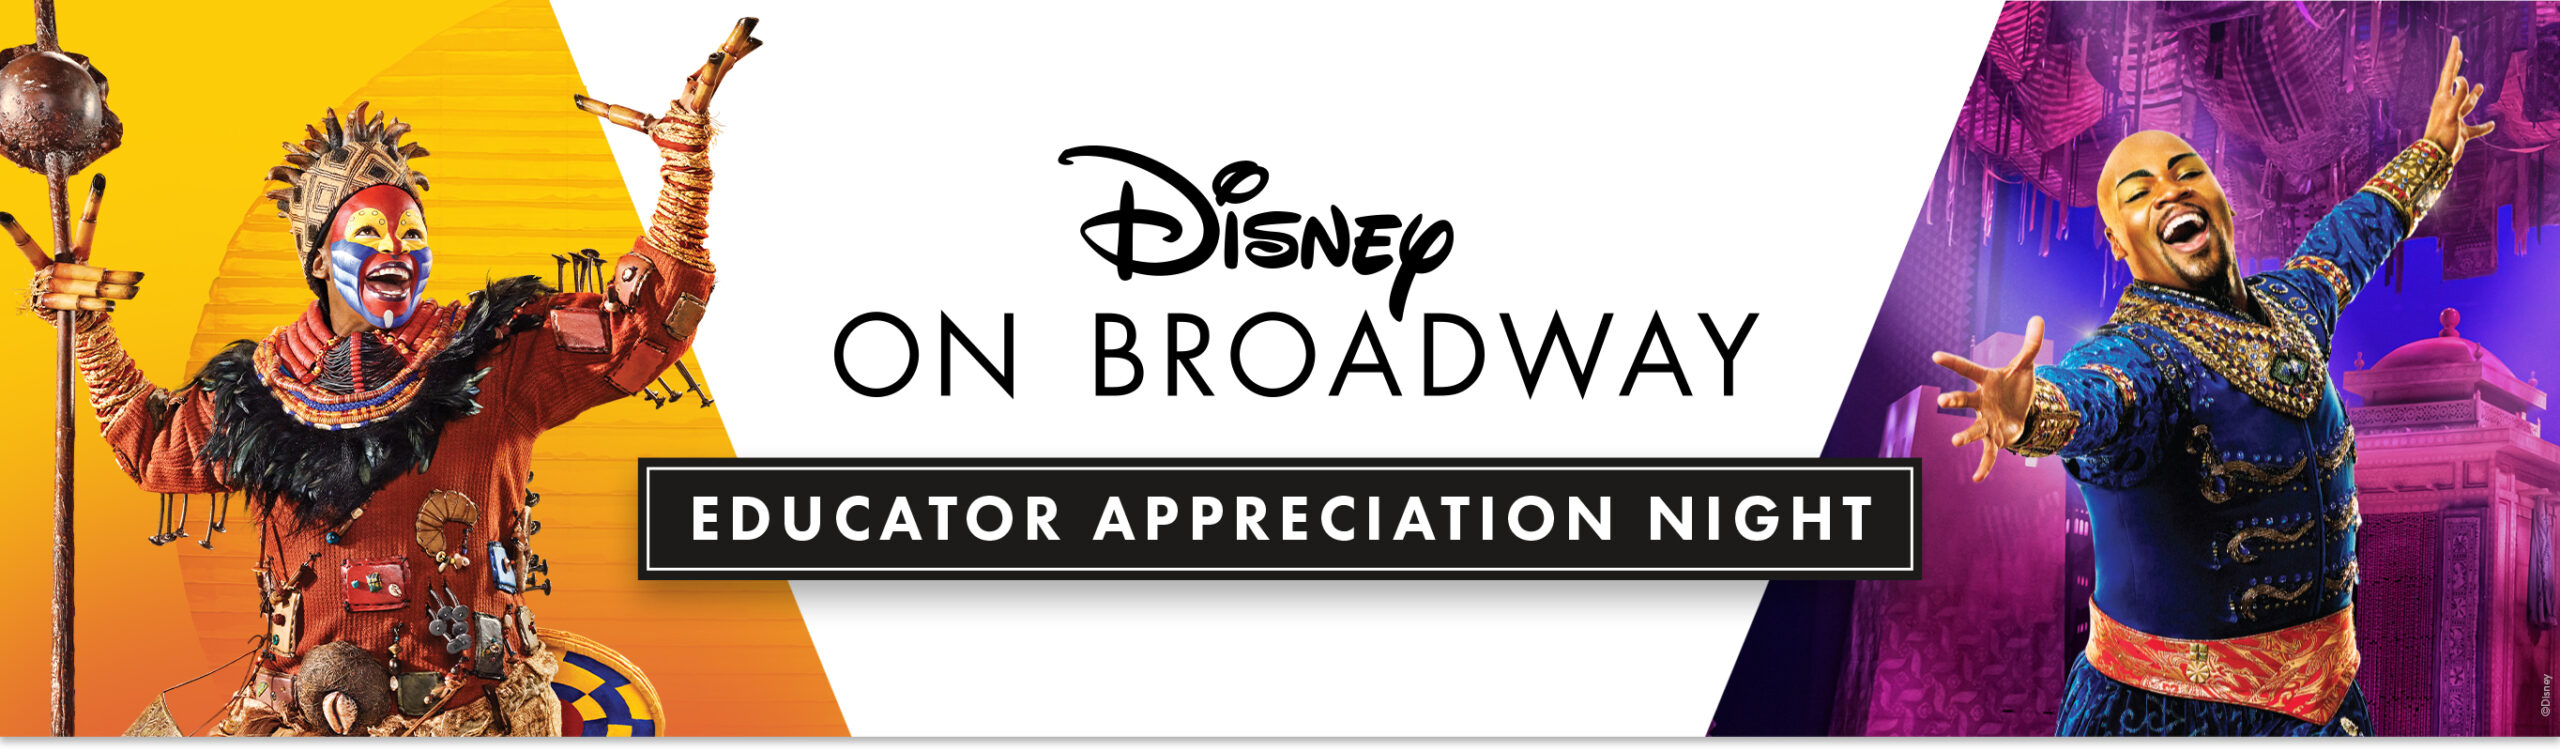 Disney on Broadway Educator Appreciation Night